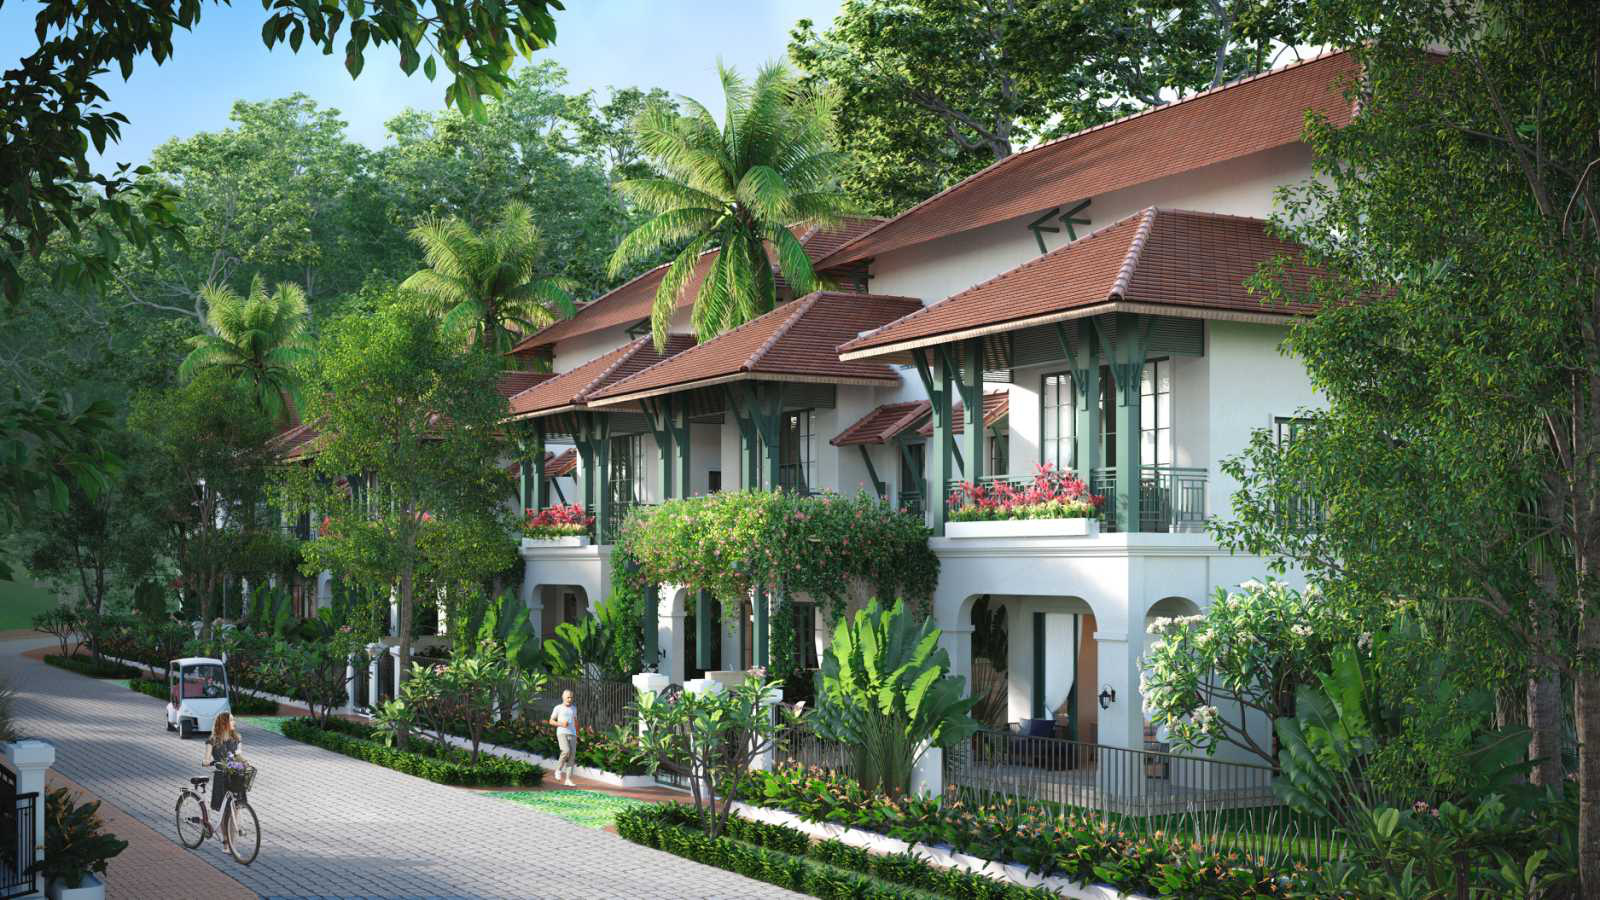 Sun Tropical Village: Giải mã sức hấp dẫn của phân khu Tropical Park - Ảnh 3.